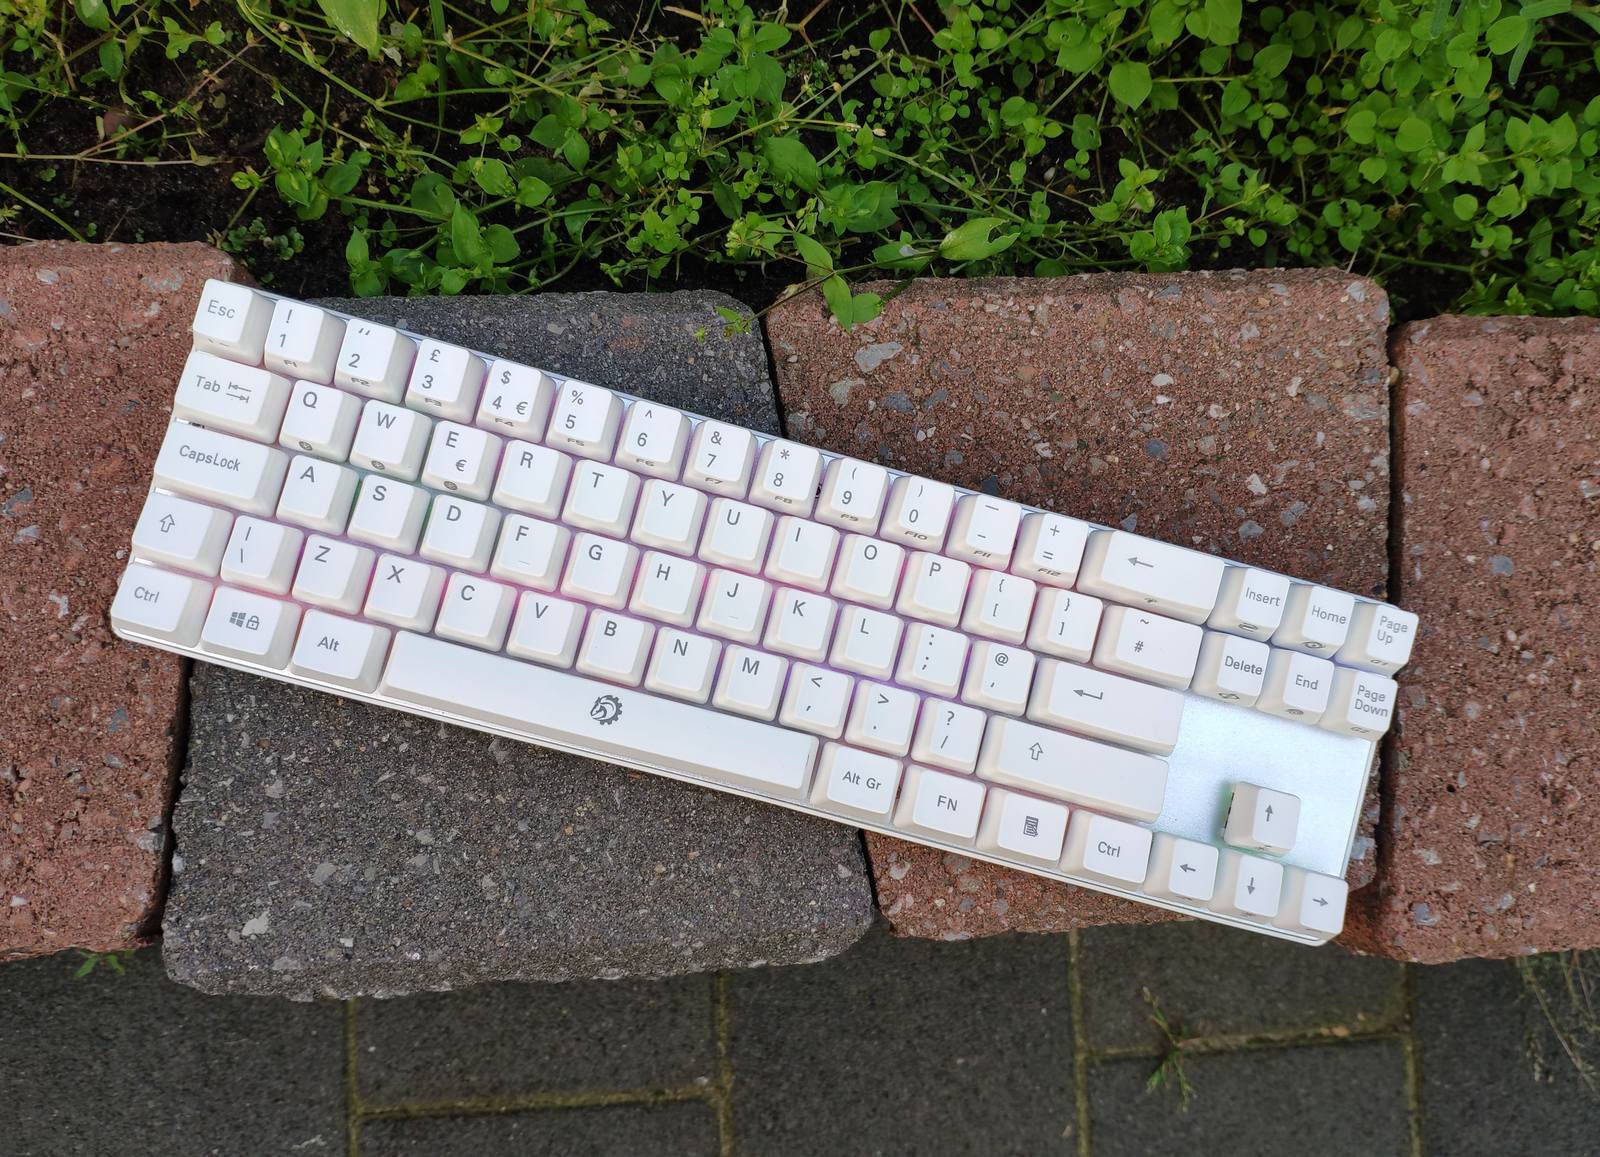 Drevo Calibur - My not-so custom keyboard